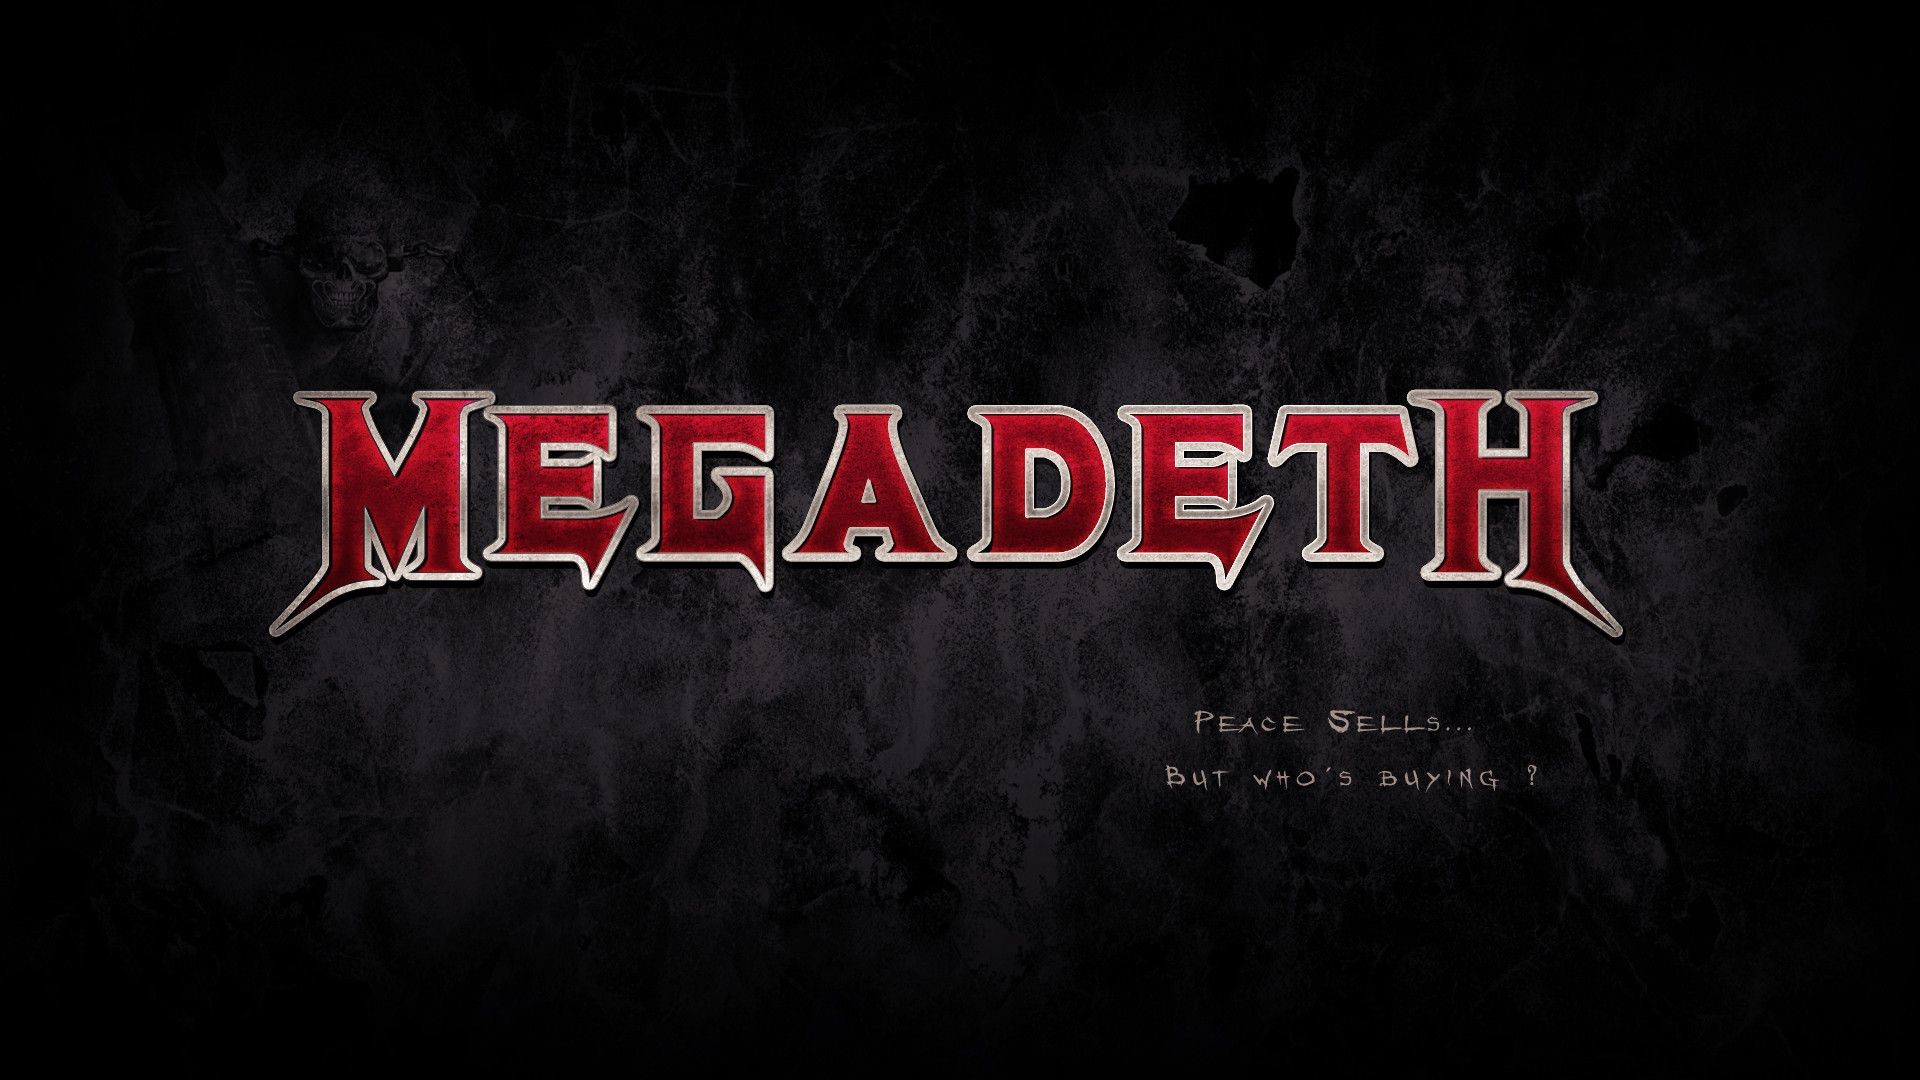 Megadeth Wallpaper HD 1080p Image